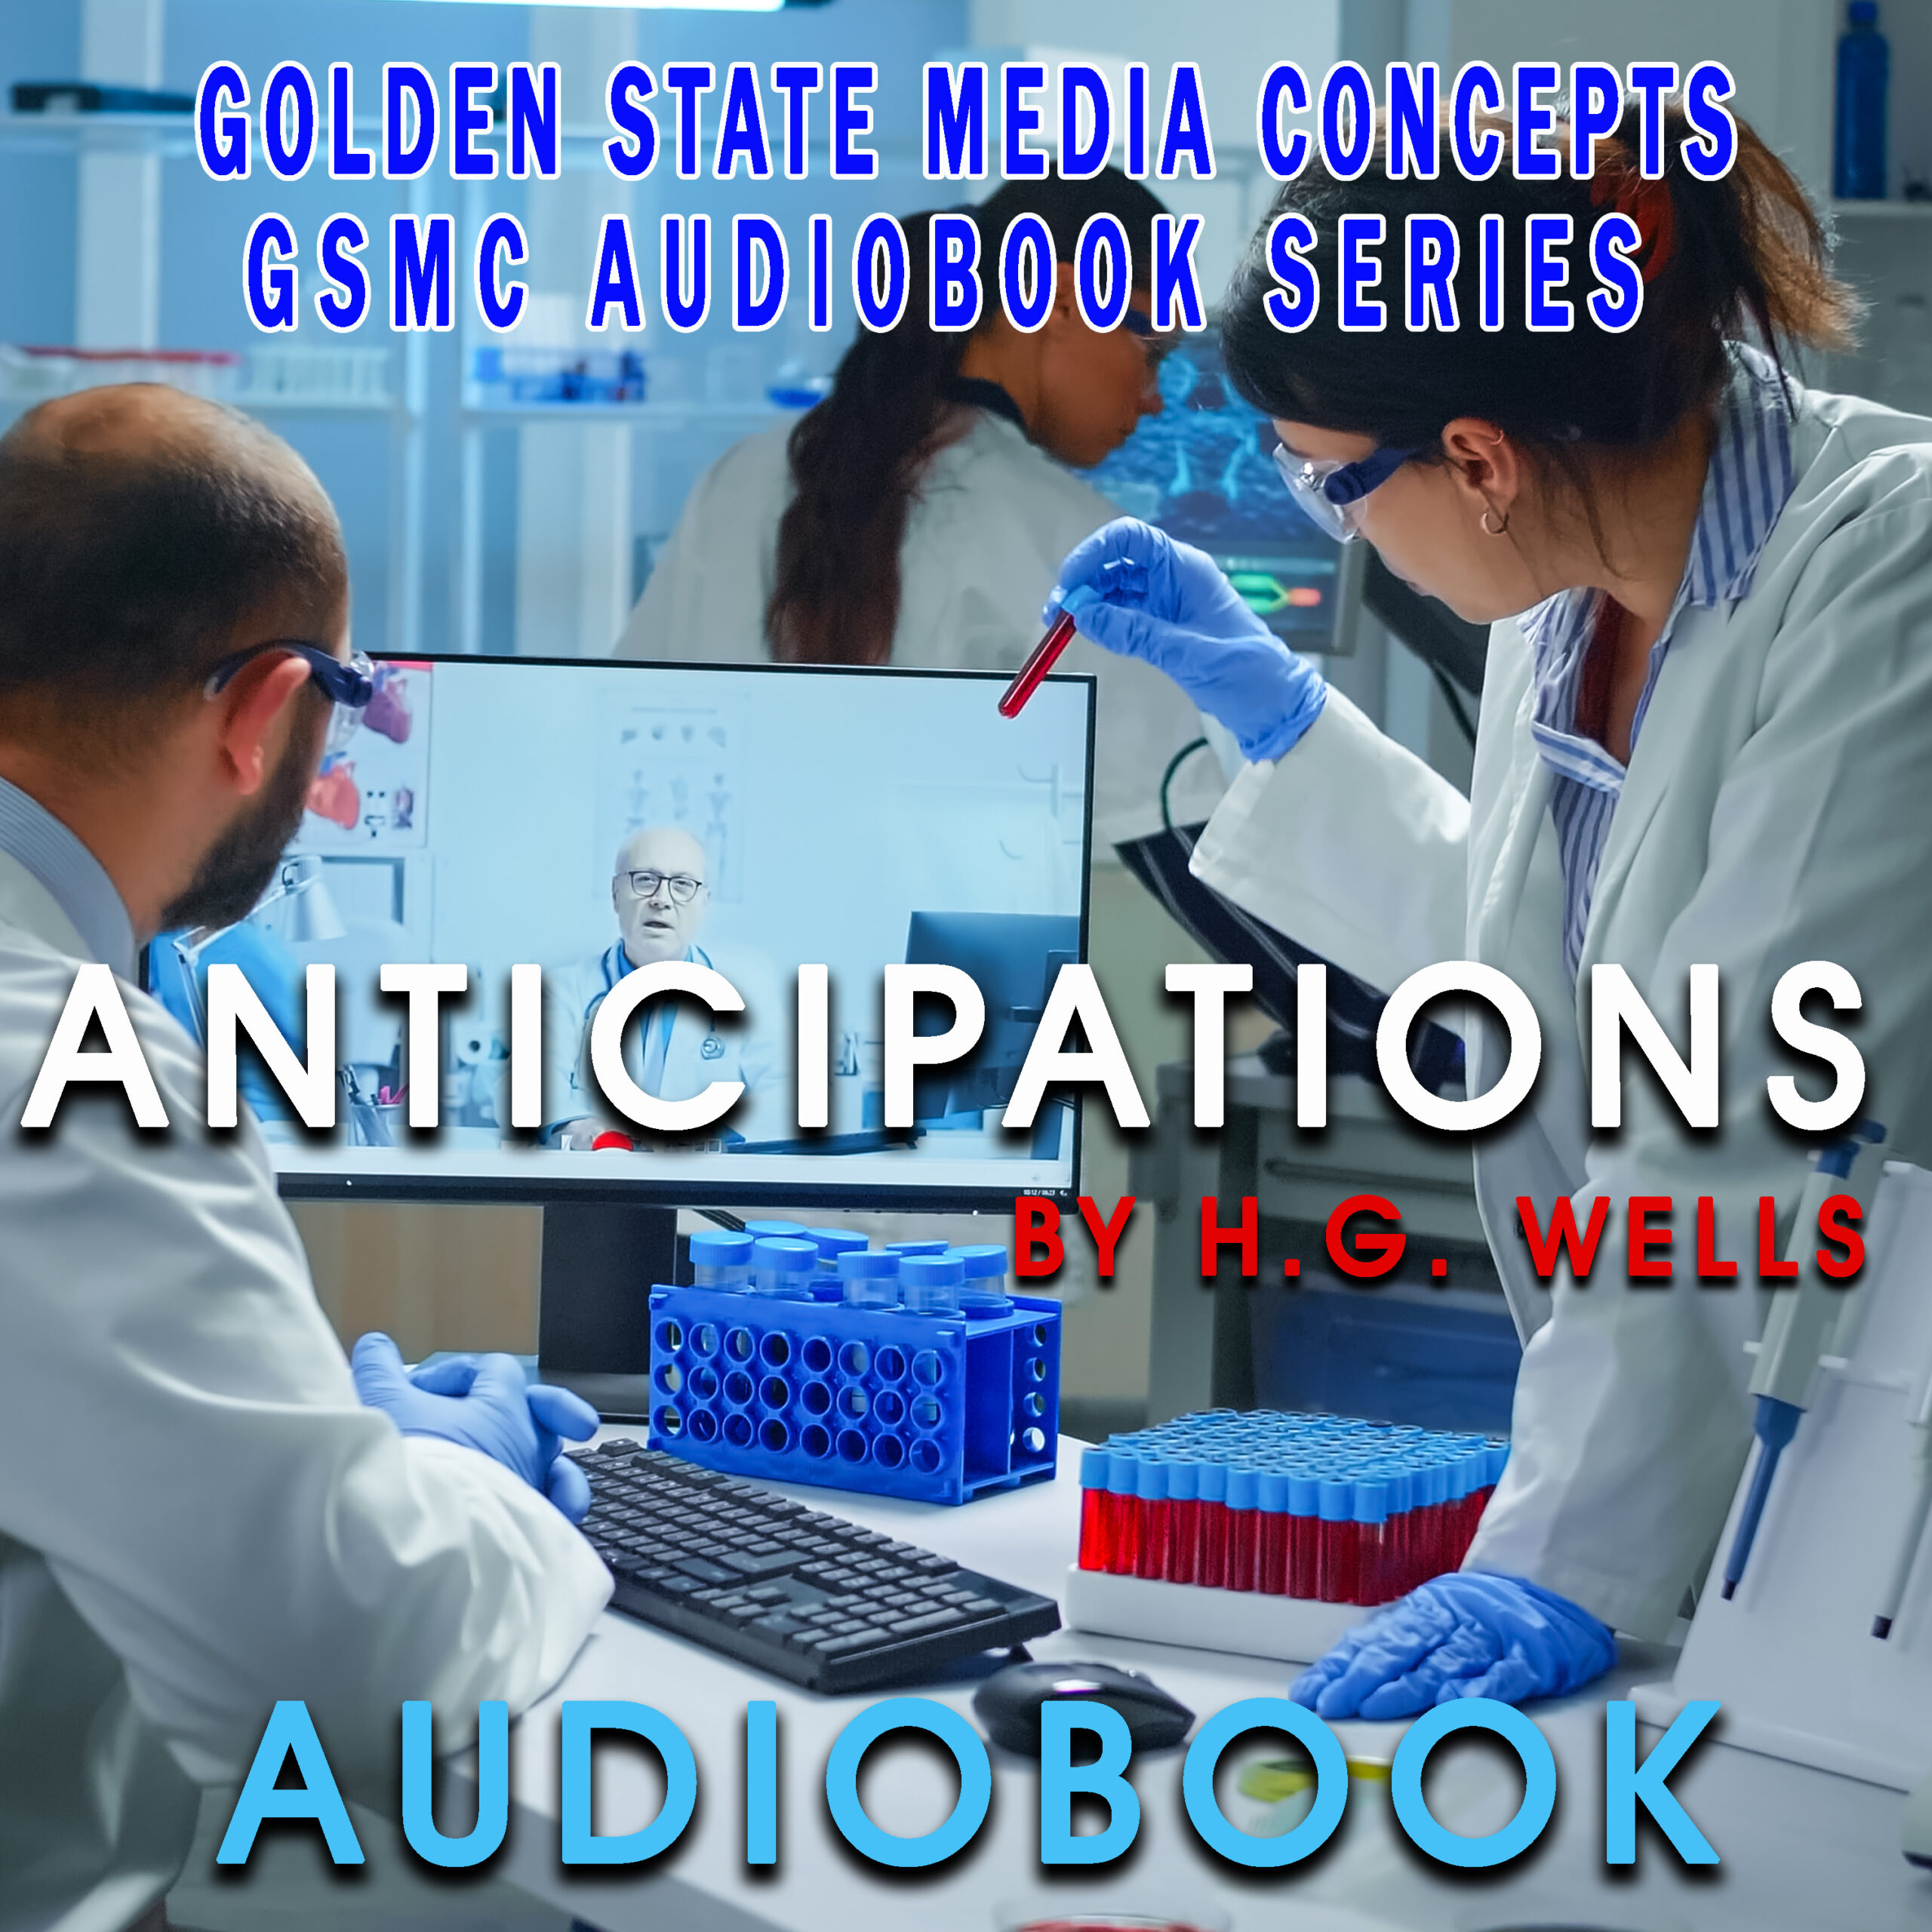 GSMC Audiobook Series: Anticipations